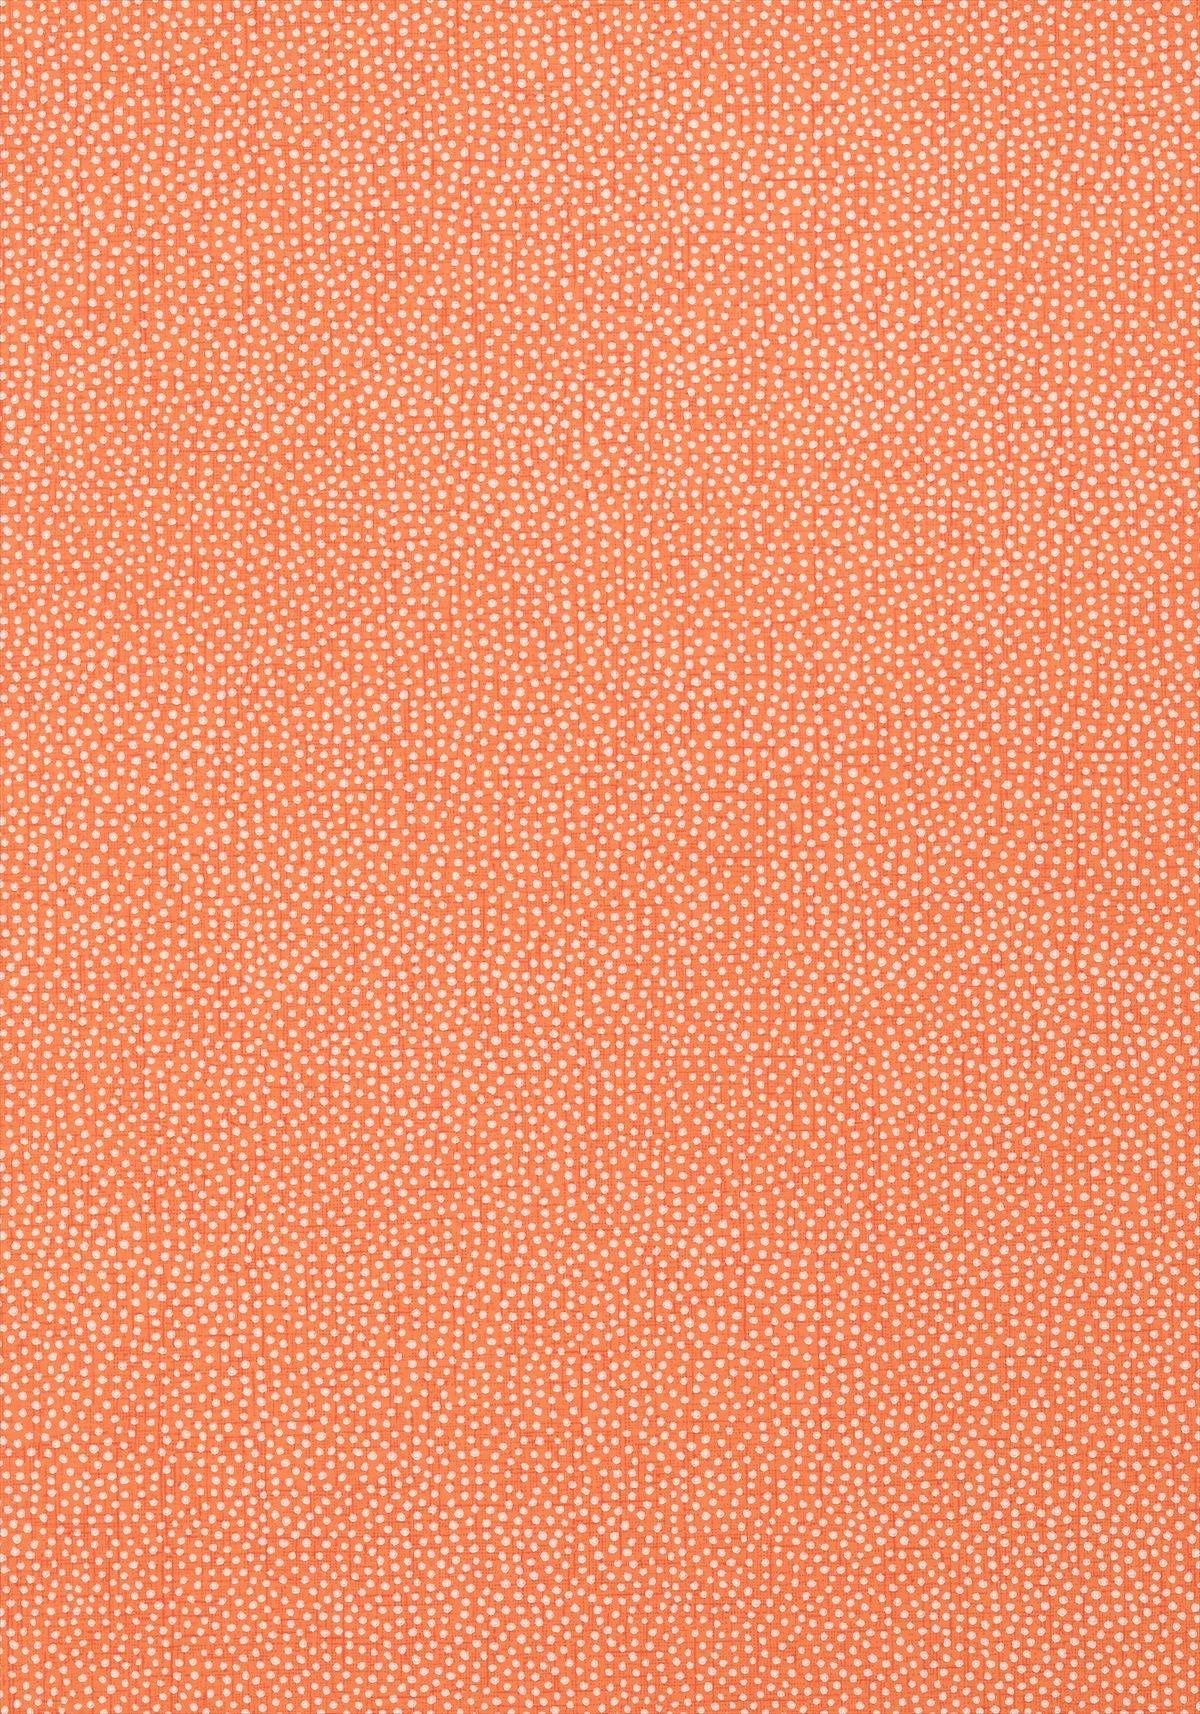 Thibaut Turini Dots Orange Wallpaper 839 T 2967. Trend